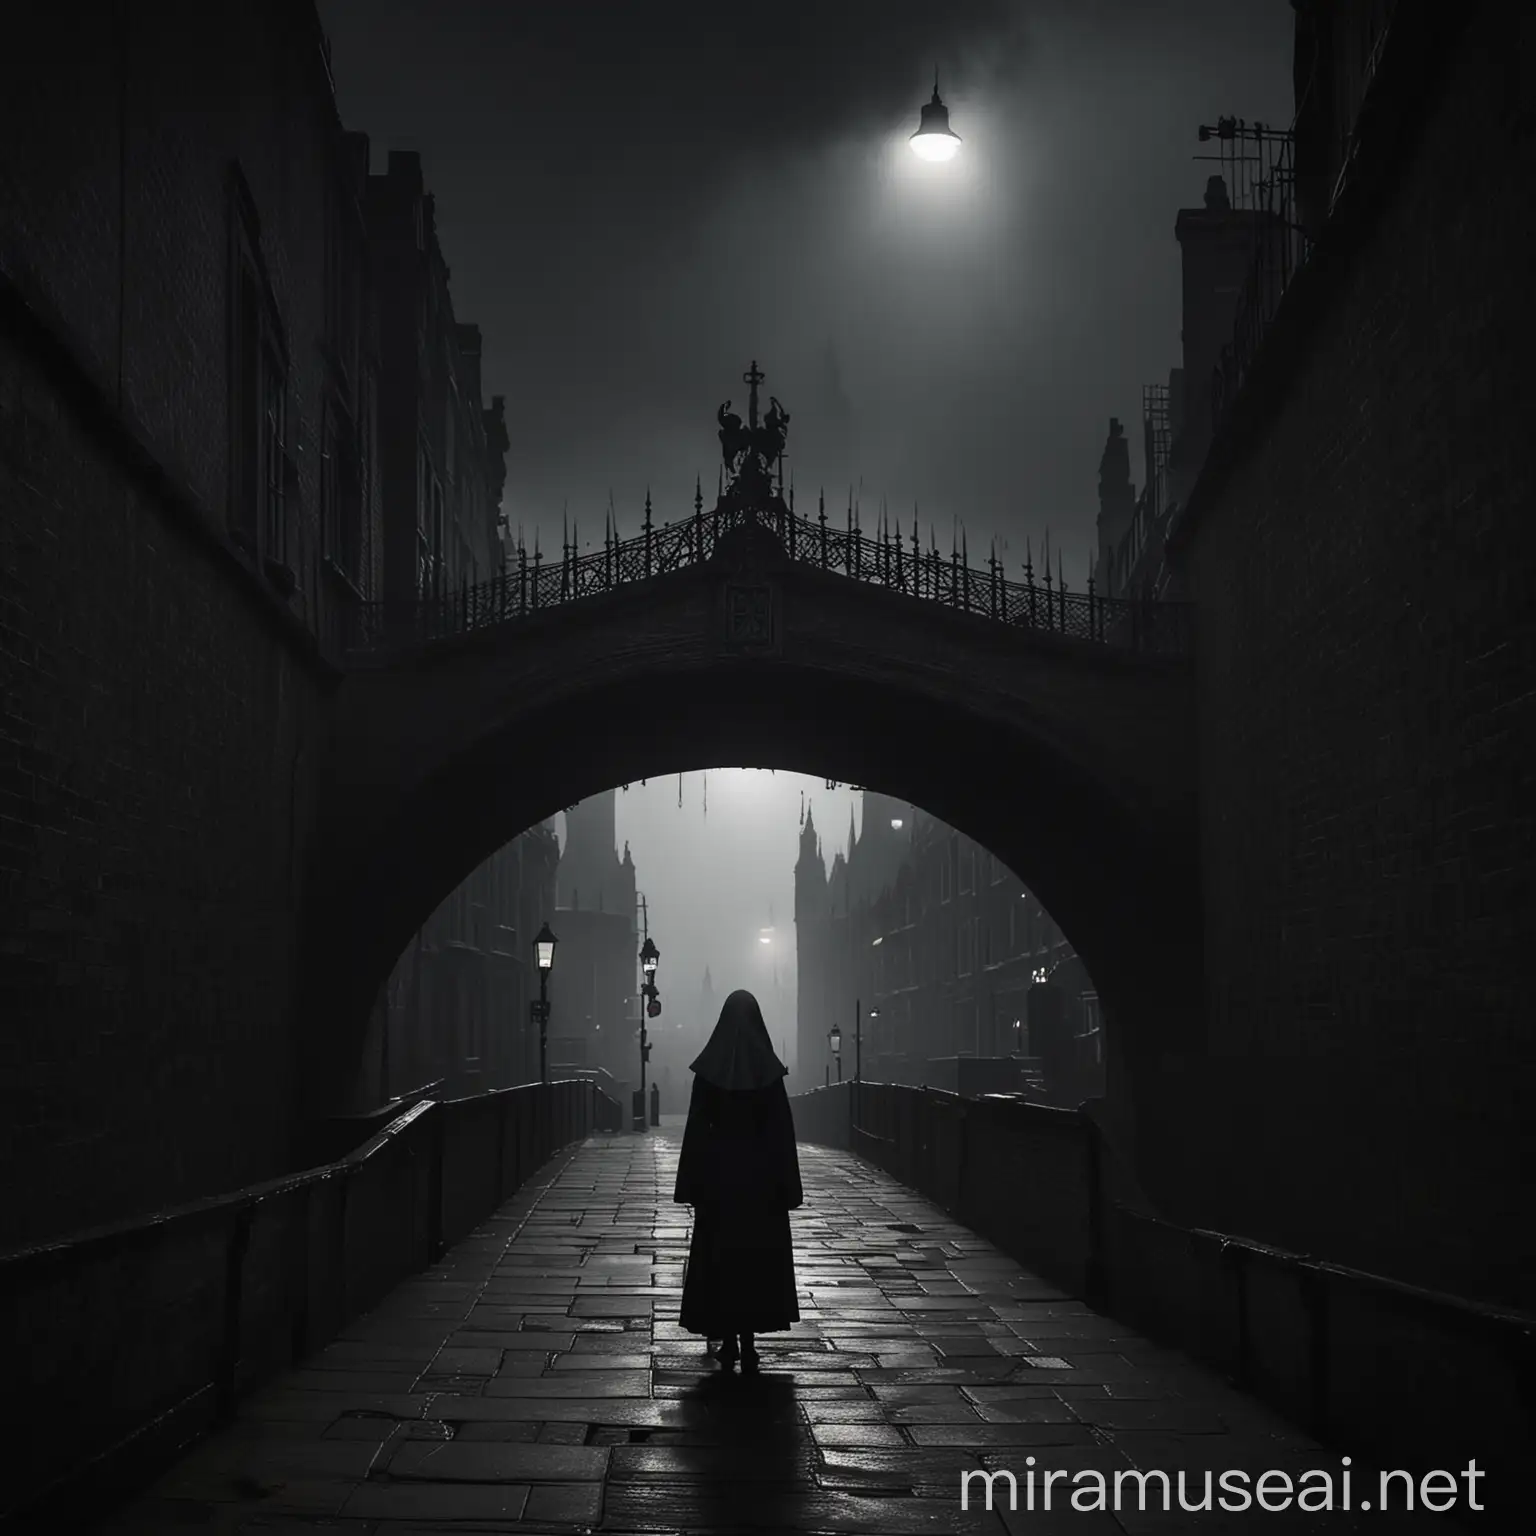 Mysterious London Bridge Silhouette with Nun Symbolism